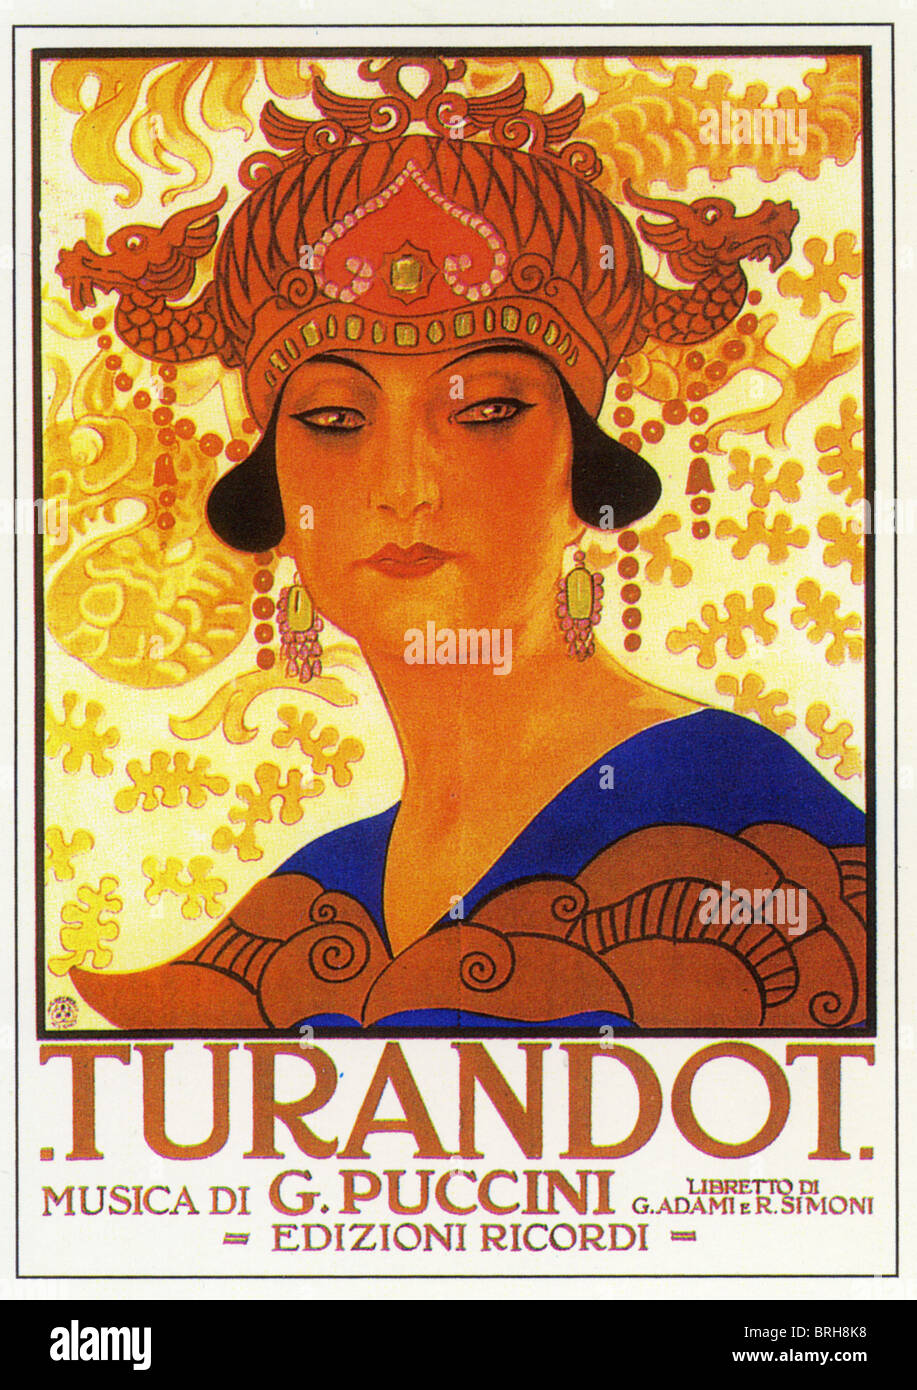 TURANDOT  Poster for the opera by Giacomo Puccini Stock Photo